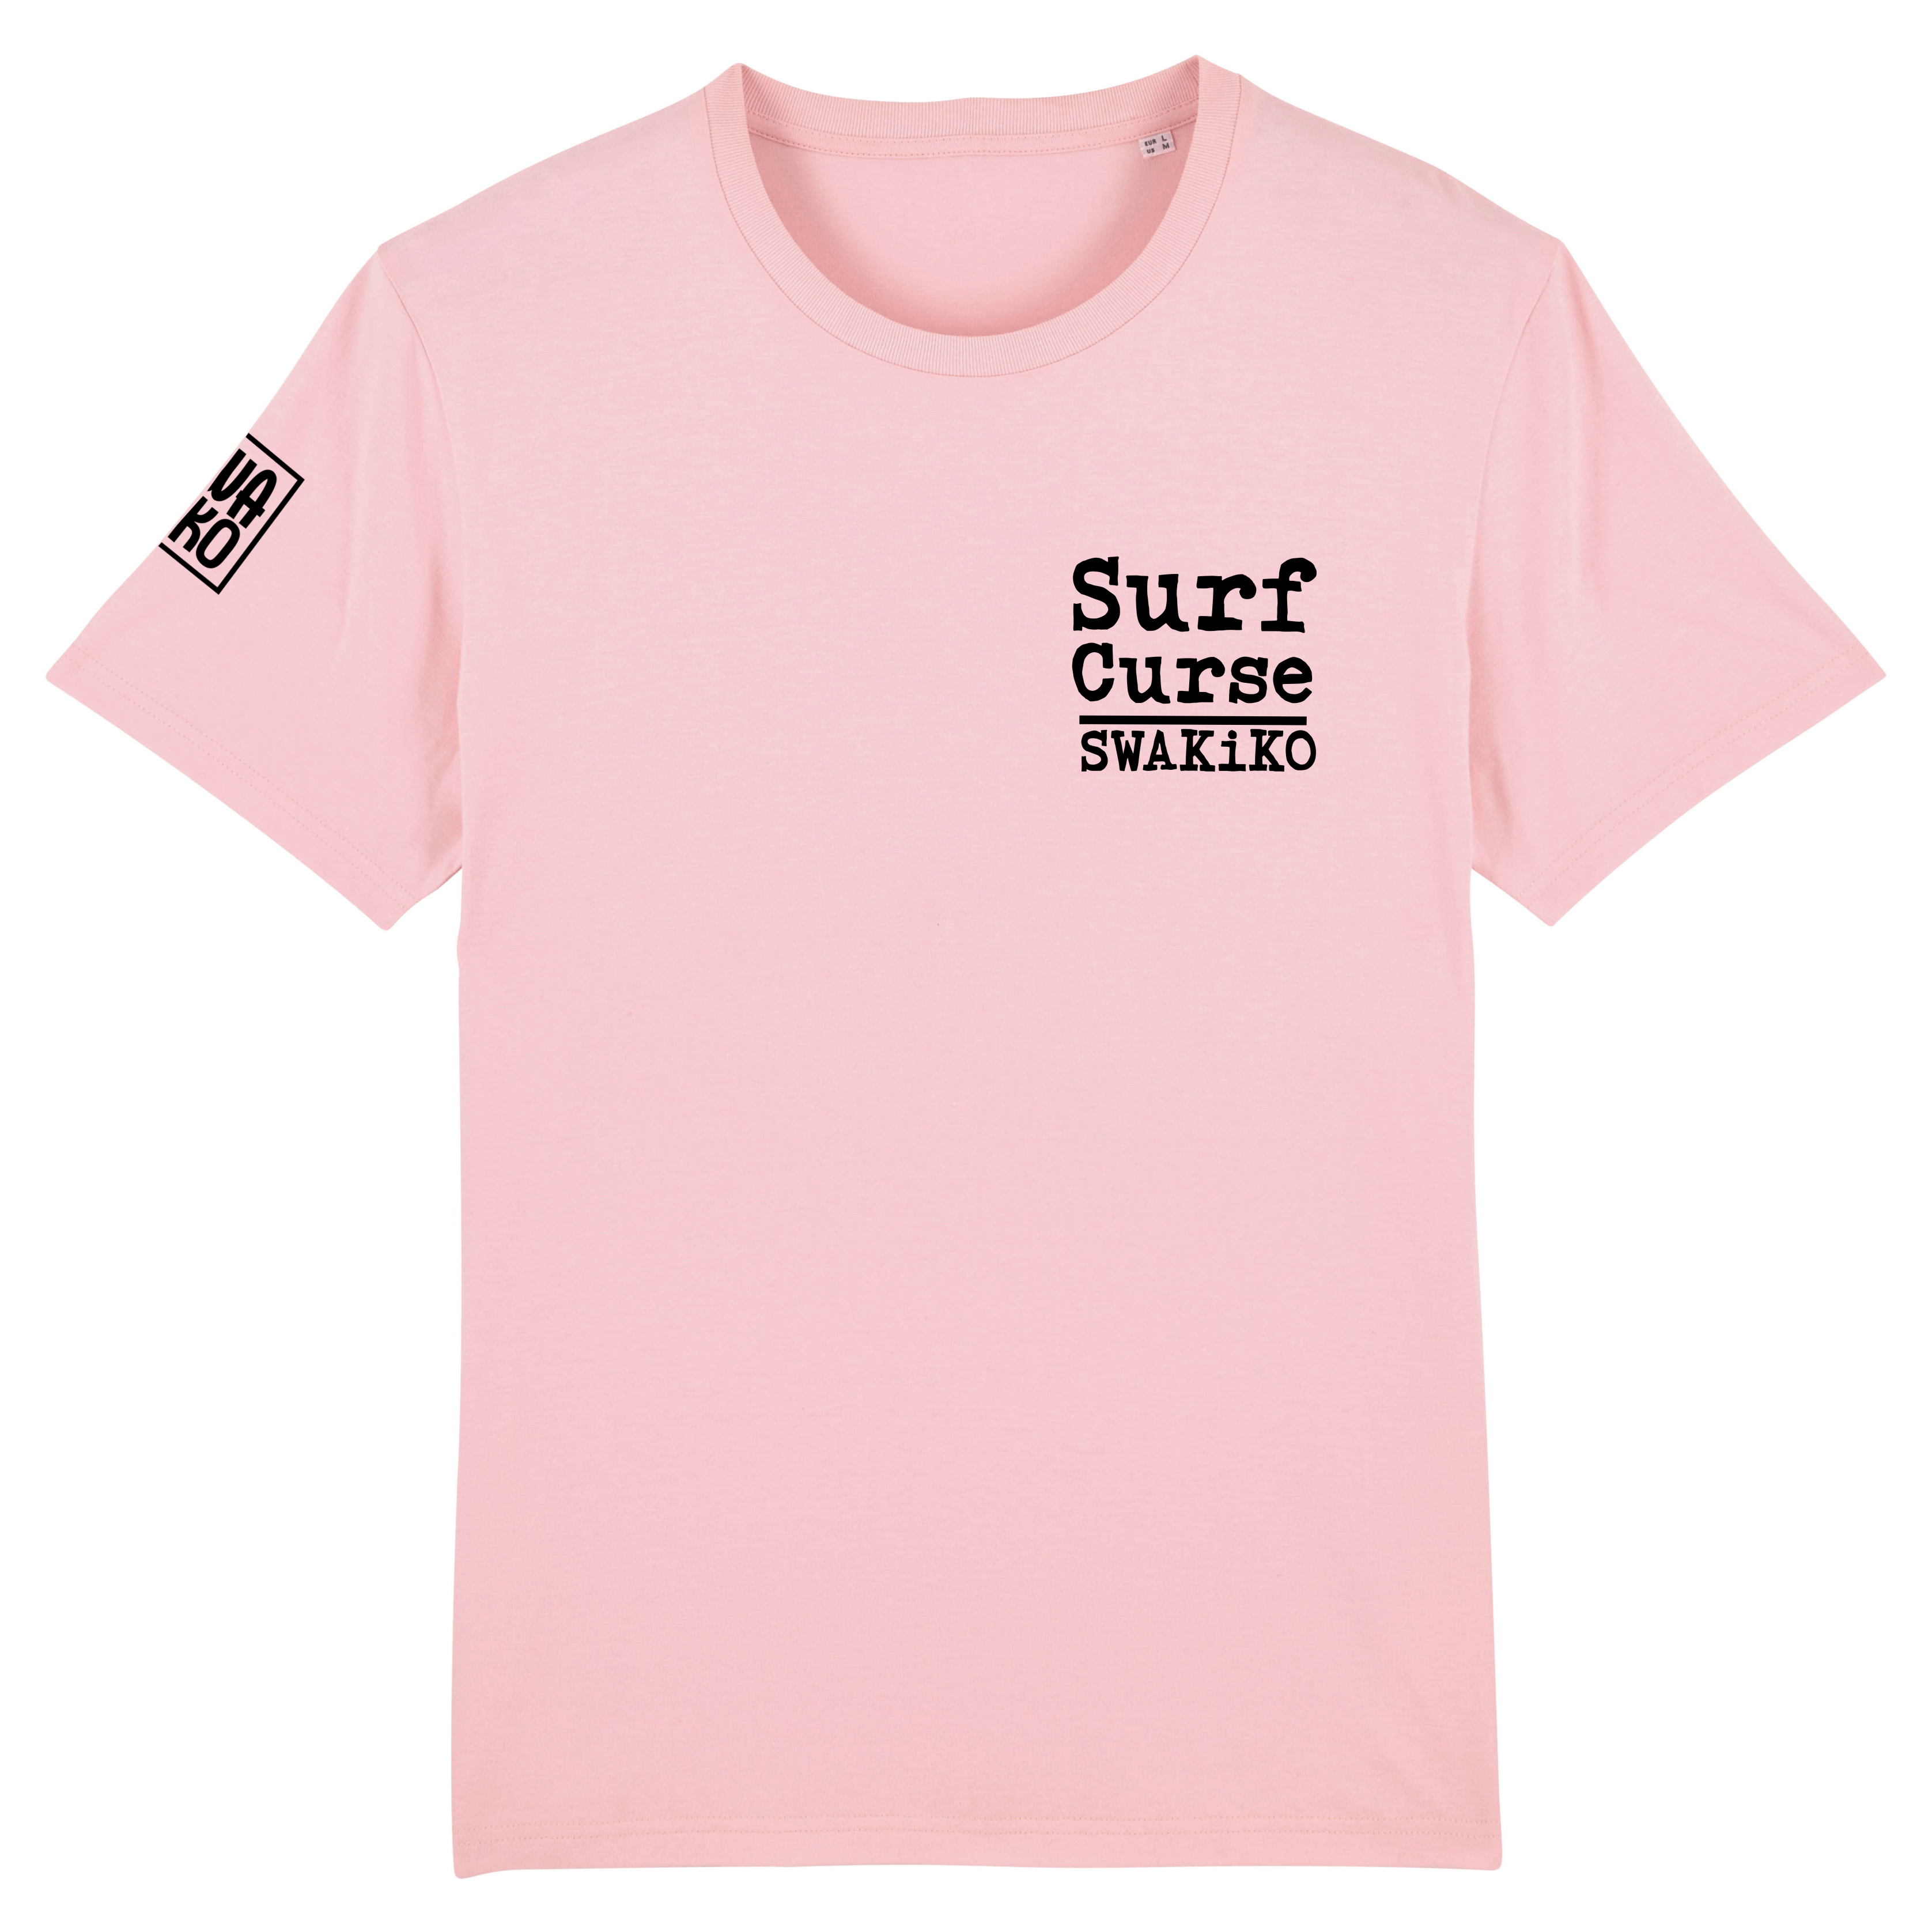 Roze T-shirt met Surf Curse borst logo van Swakiko